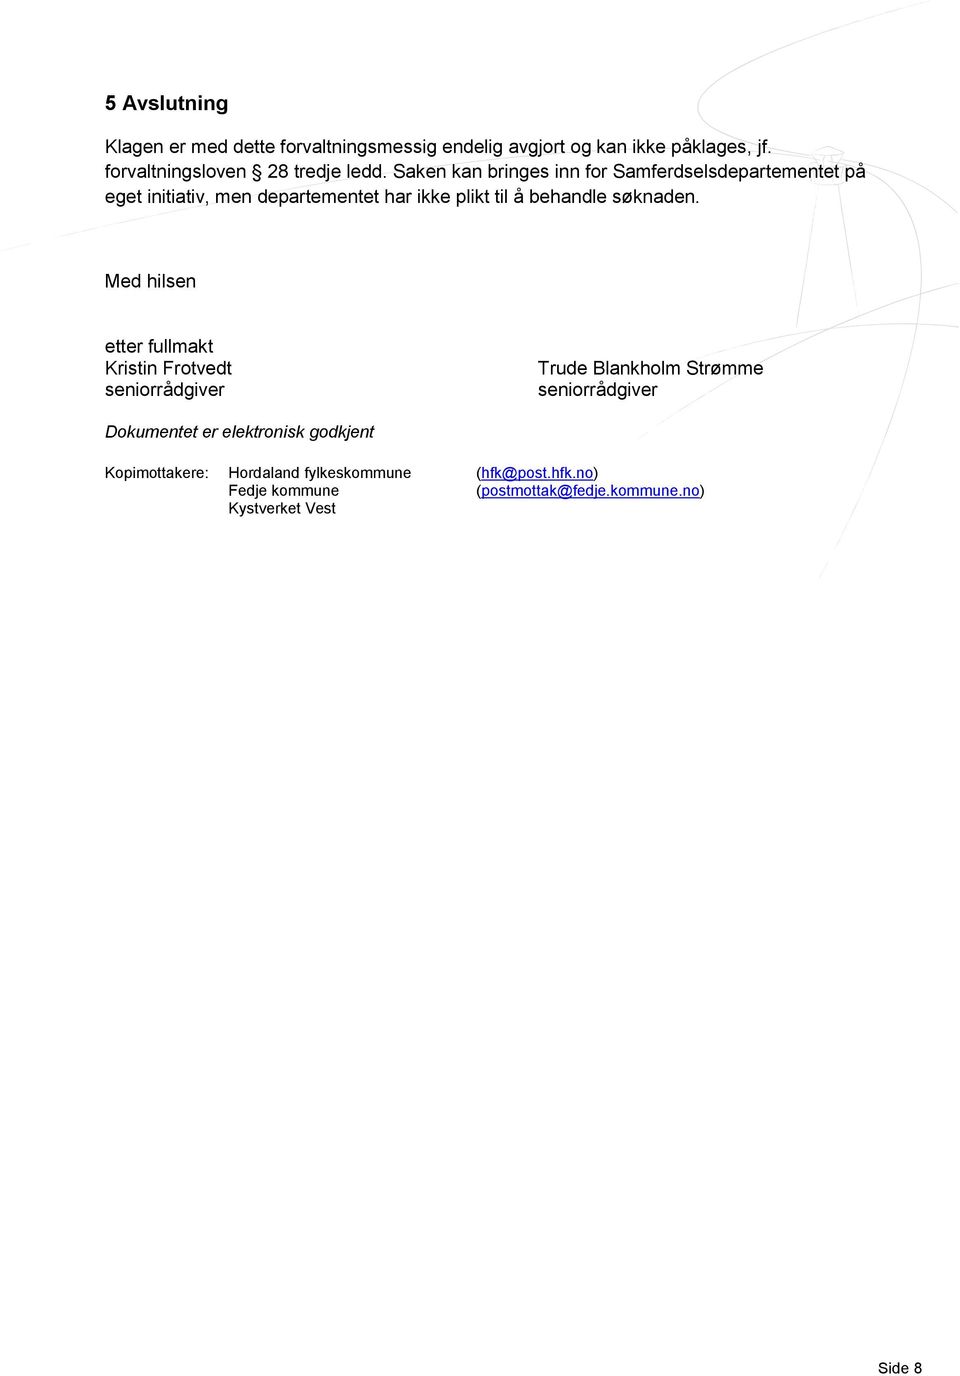 Med hilsen etter fullmakt Kristin Frotvedt seniorrådgiver Trude Blankholm Strømme seniorrådgiver Dokumentet er elektronisk